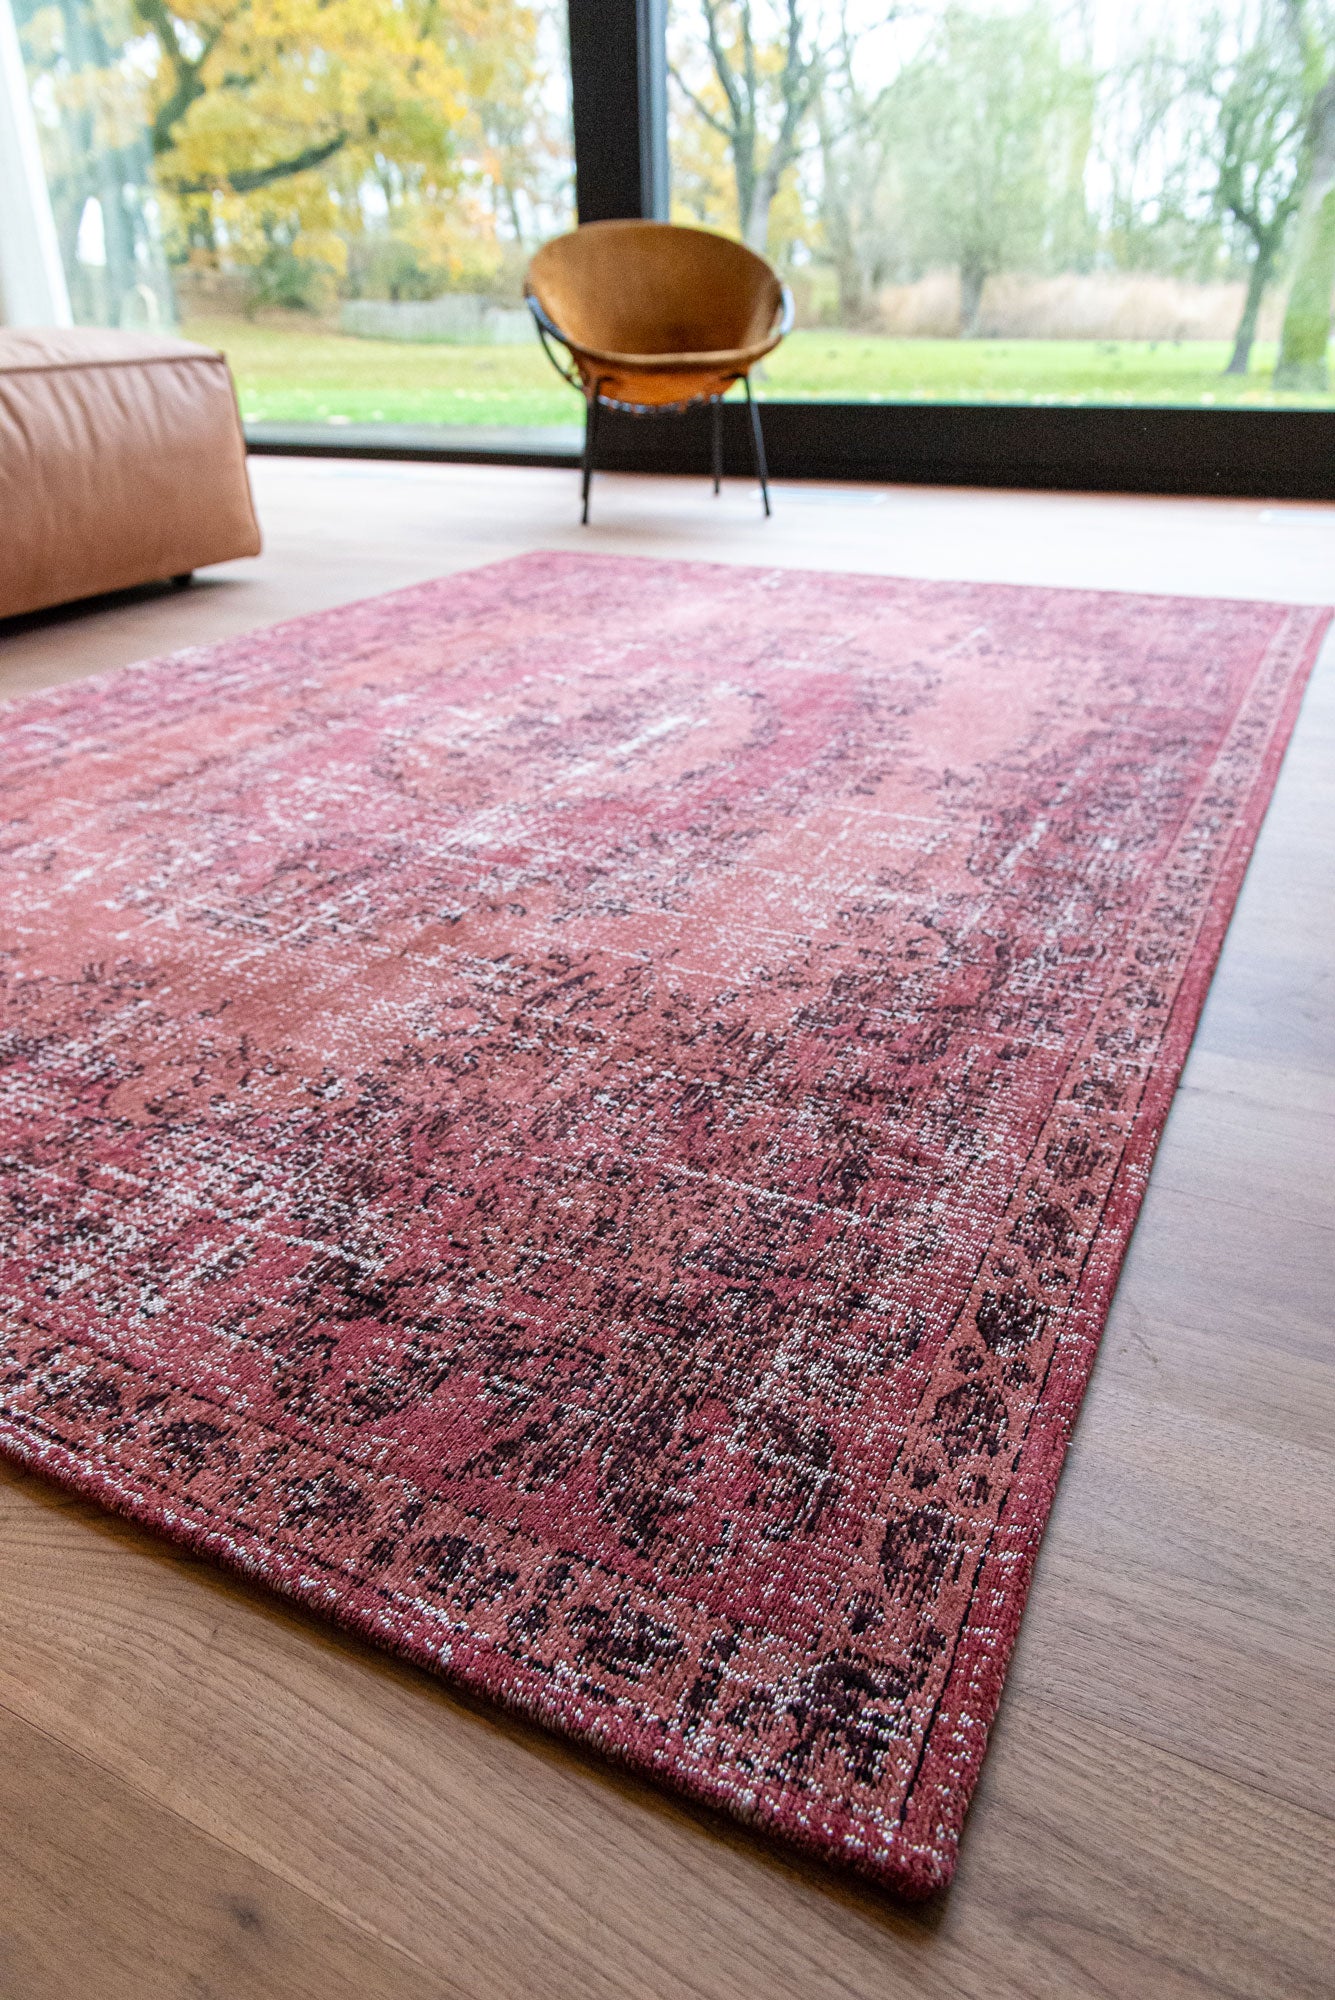 DAM-601: Jacquard carpet